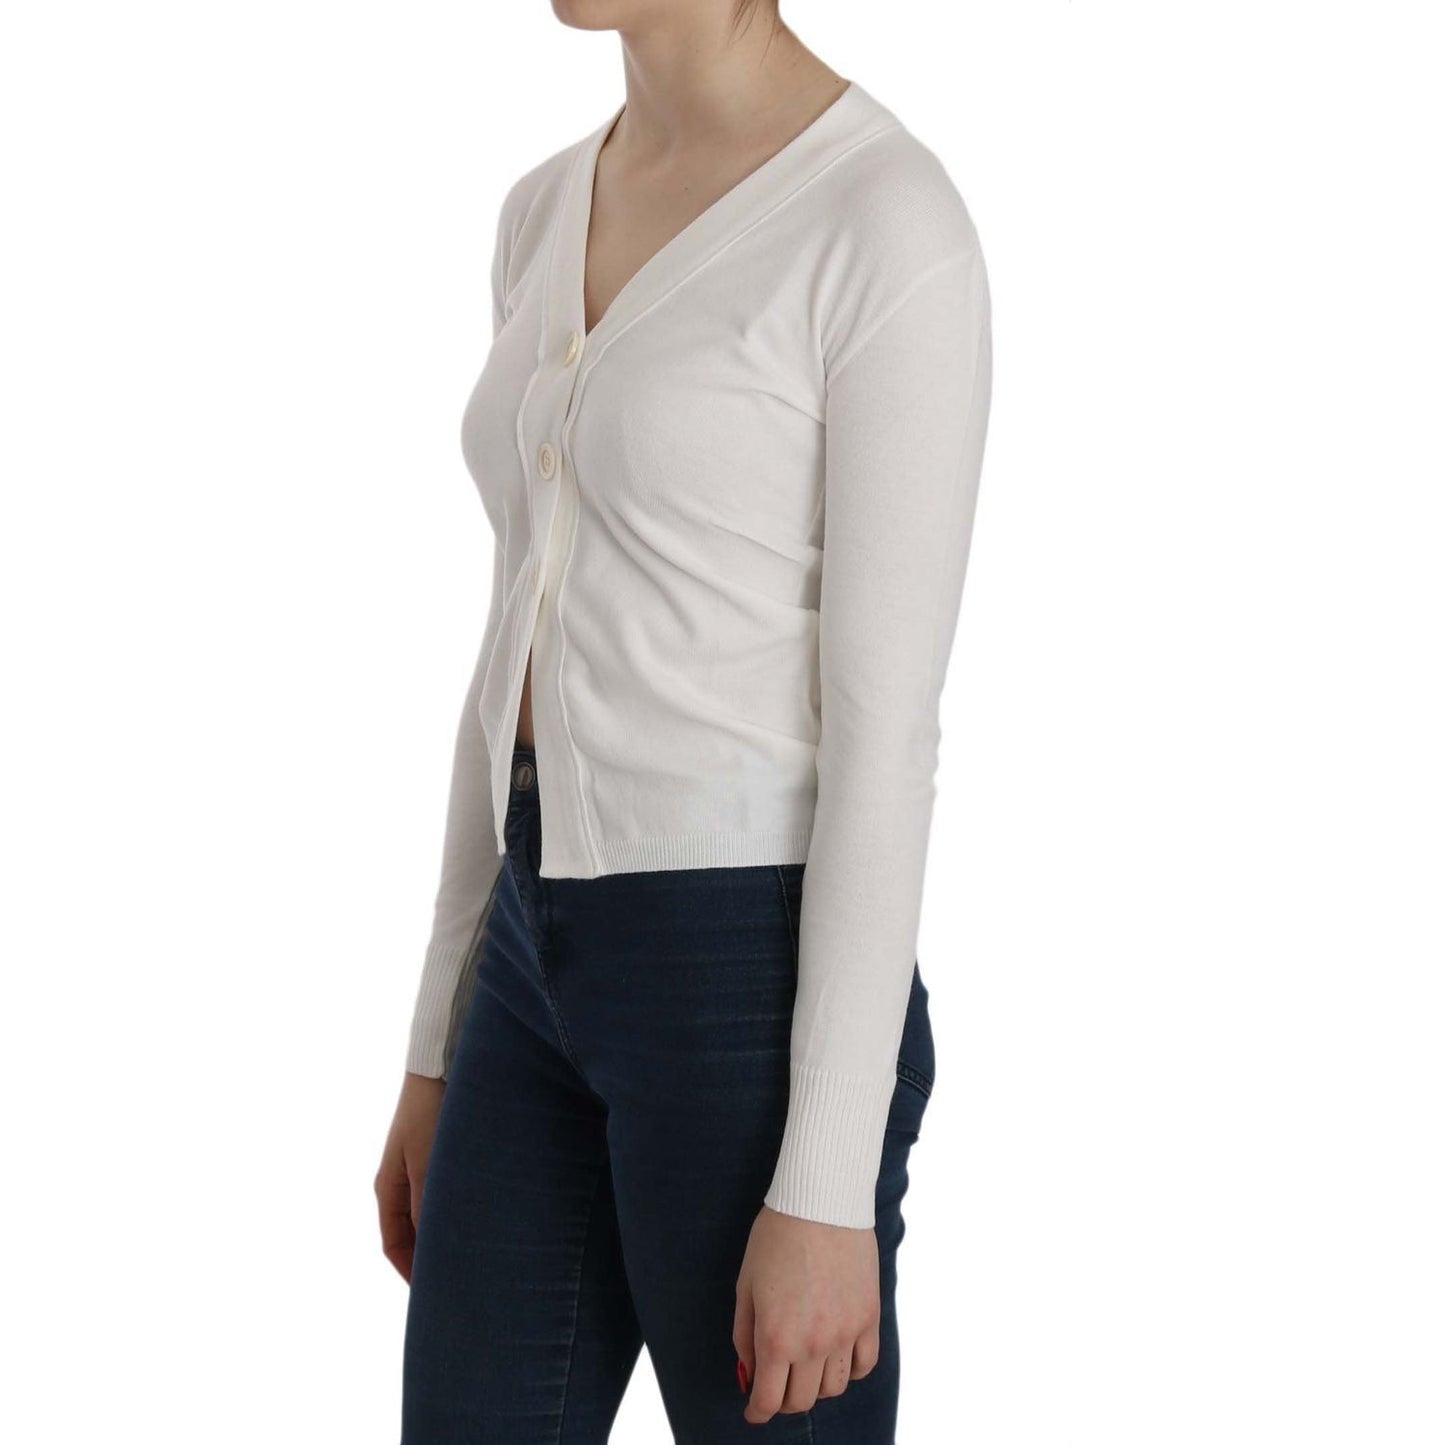 BYBLOS Elegant White V-Neck Cropped Cardigan Blouse white-v-neck-long-sleeve-cropped-cardigan-tops-sweater